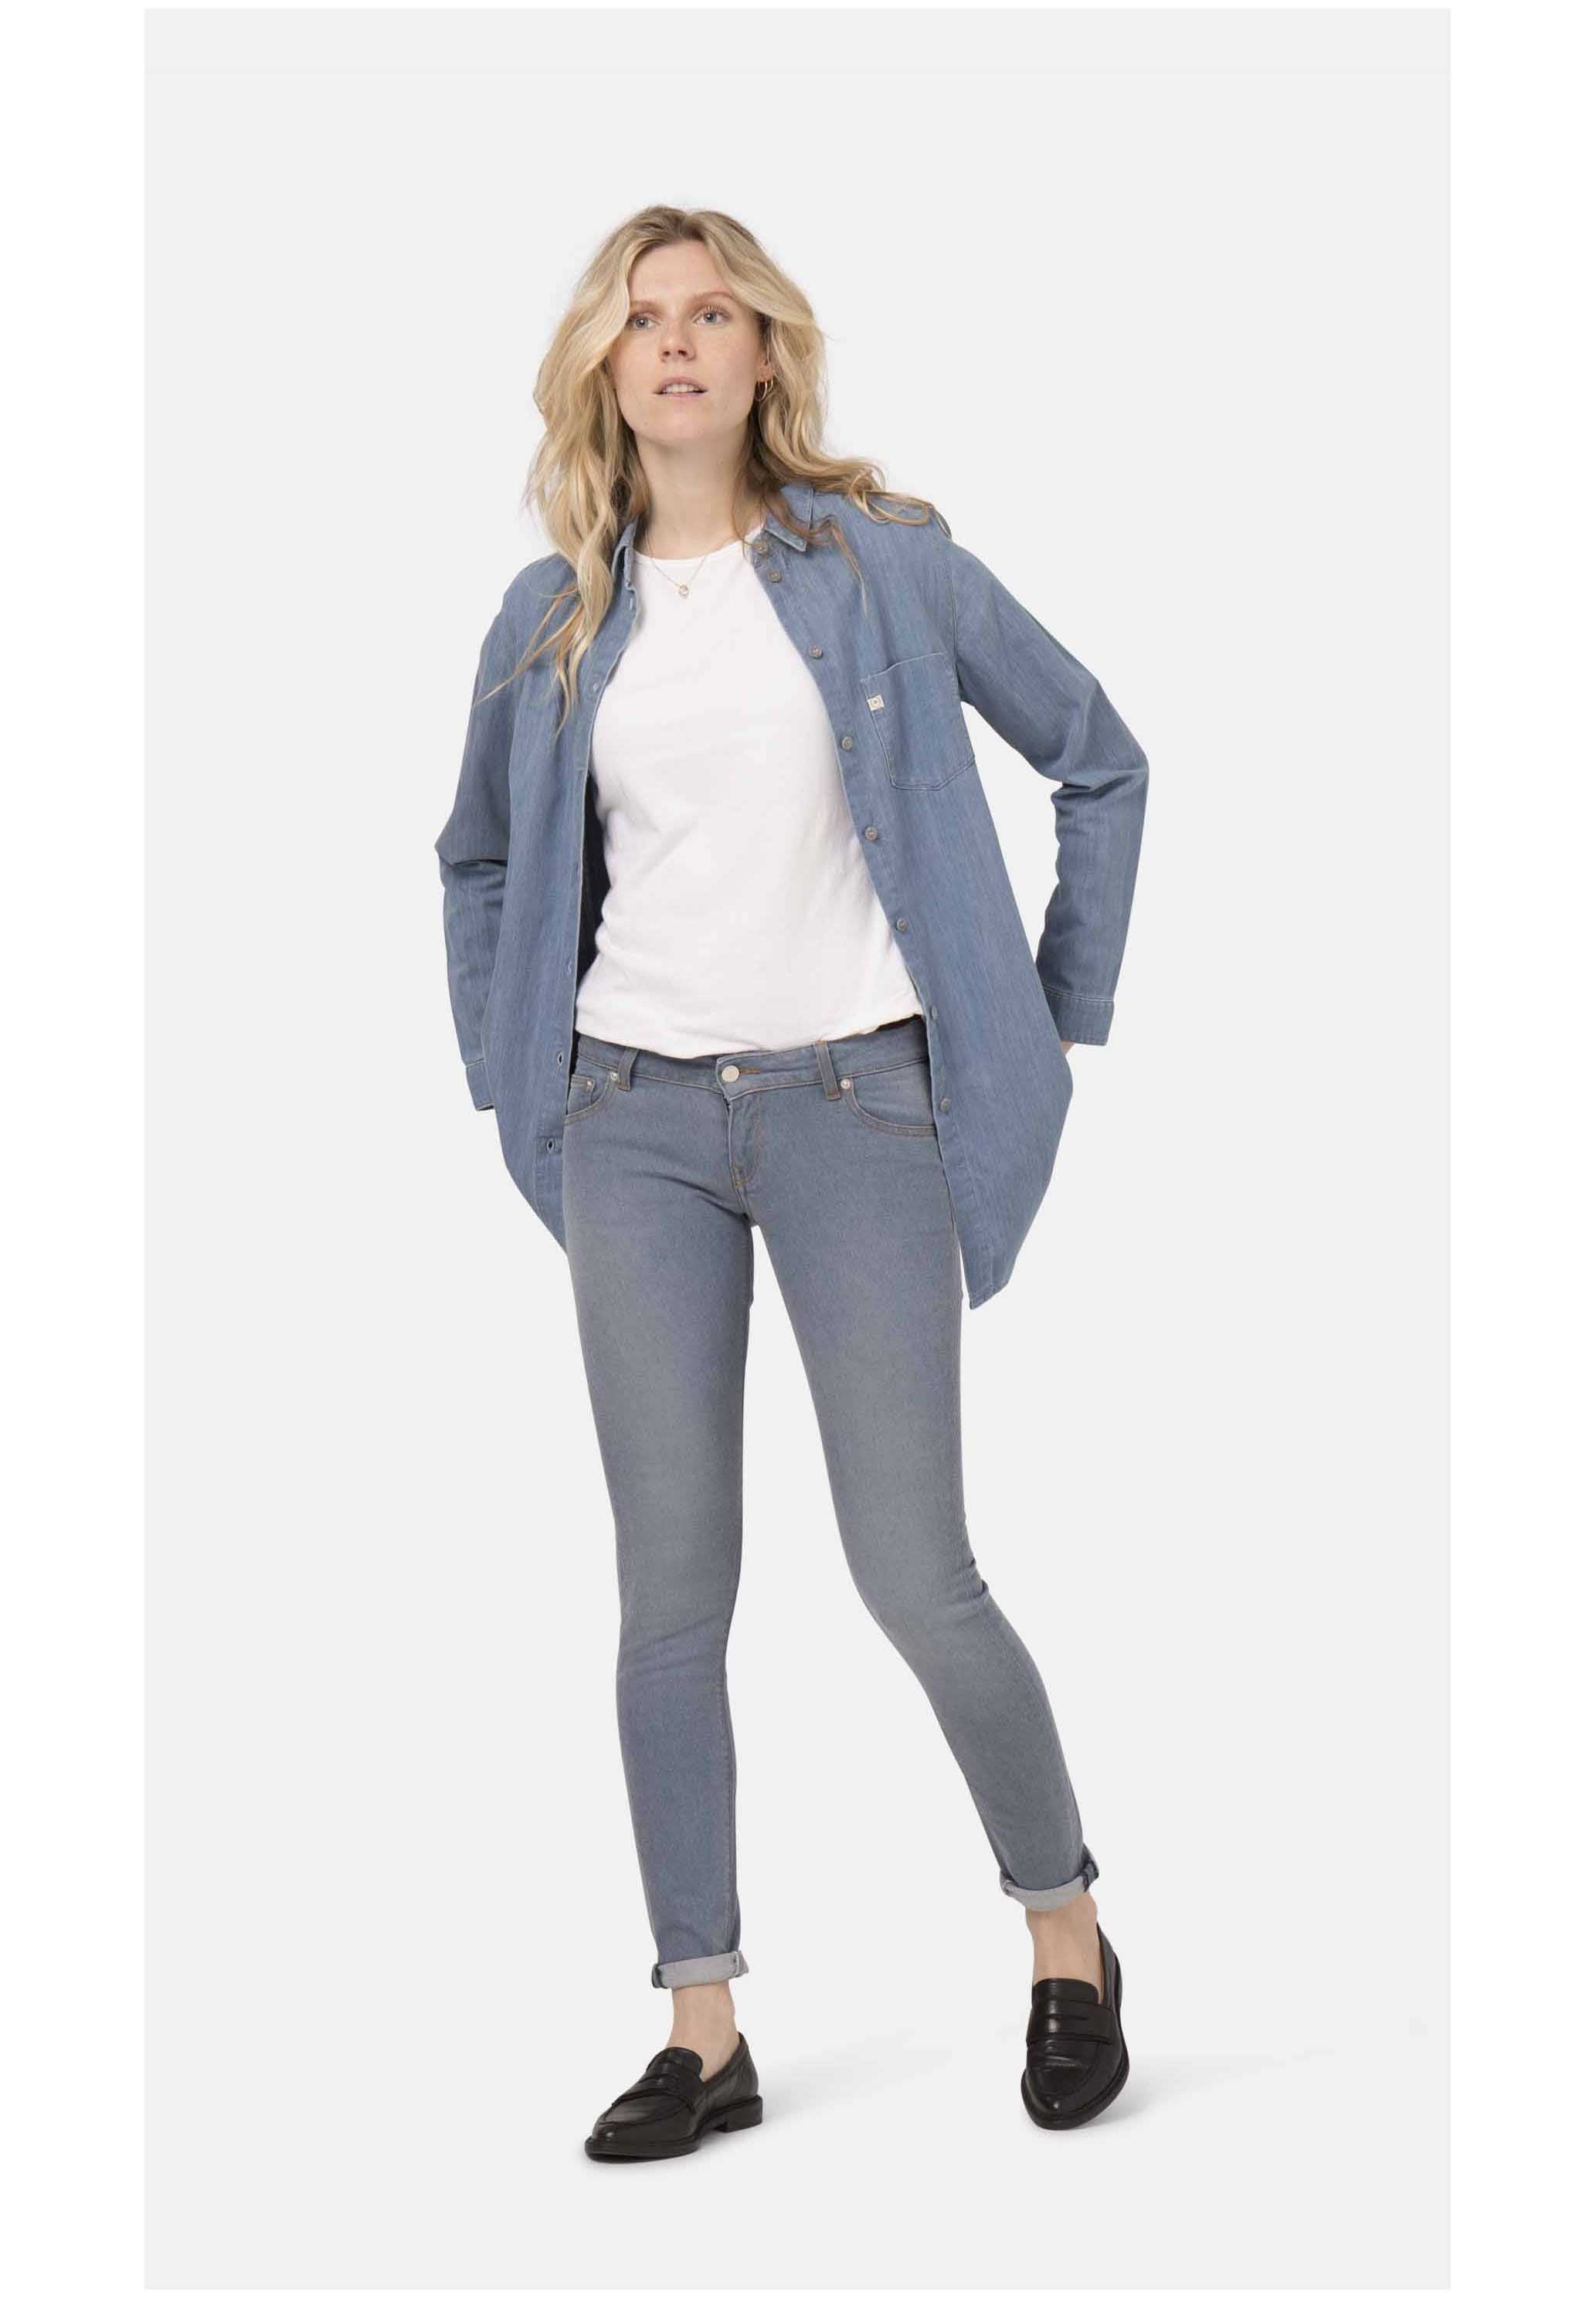 LILLY Womens skinny blue jeans by MUD, W28 / L30